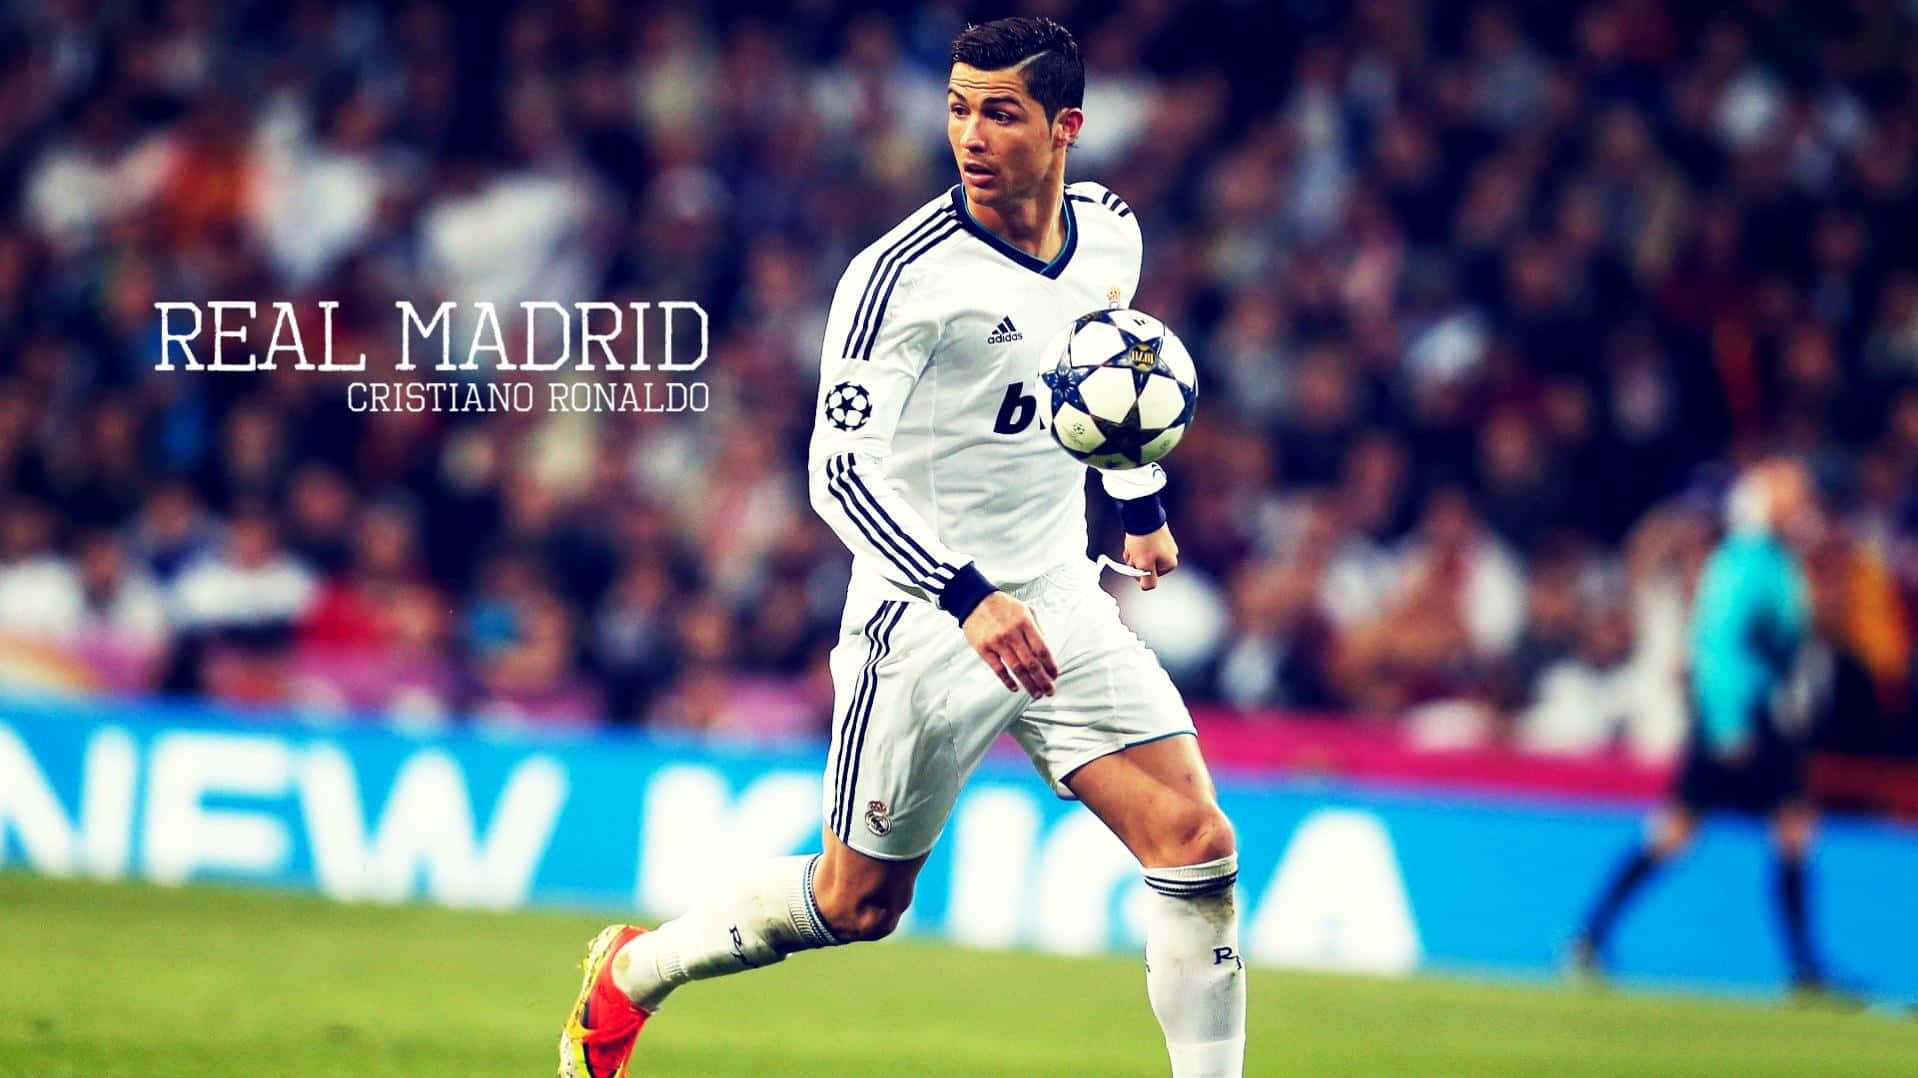 World-renowned soccer player Cristiano Ronaldo